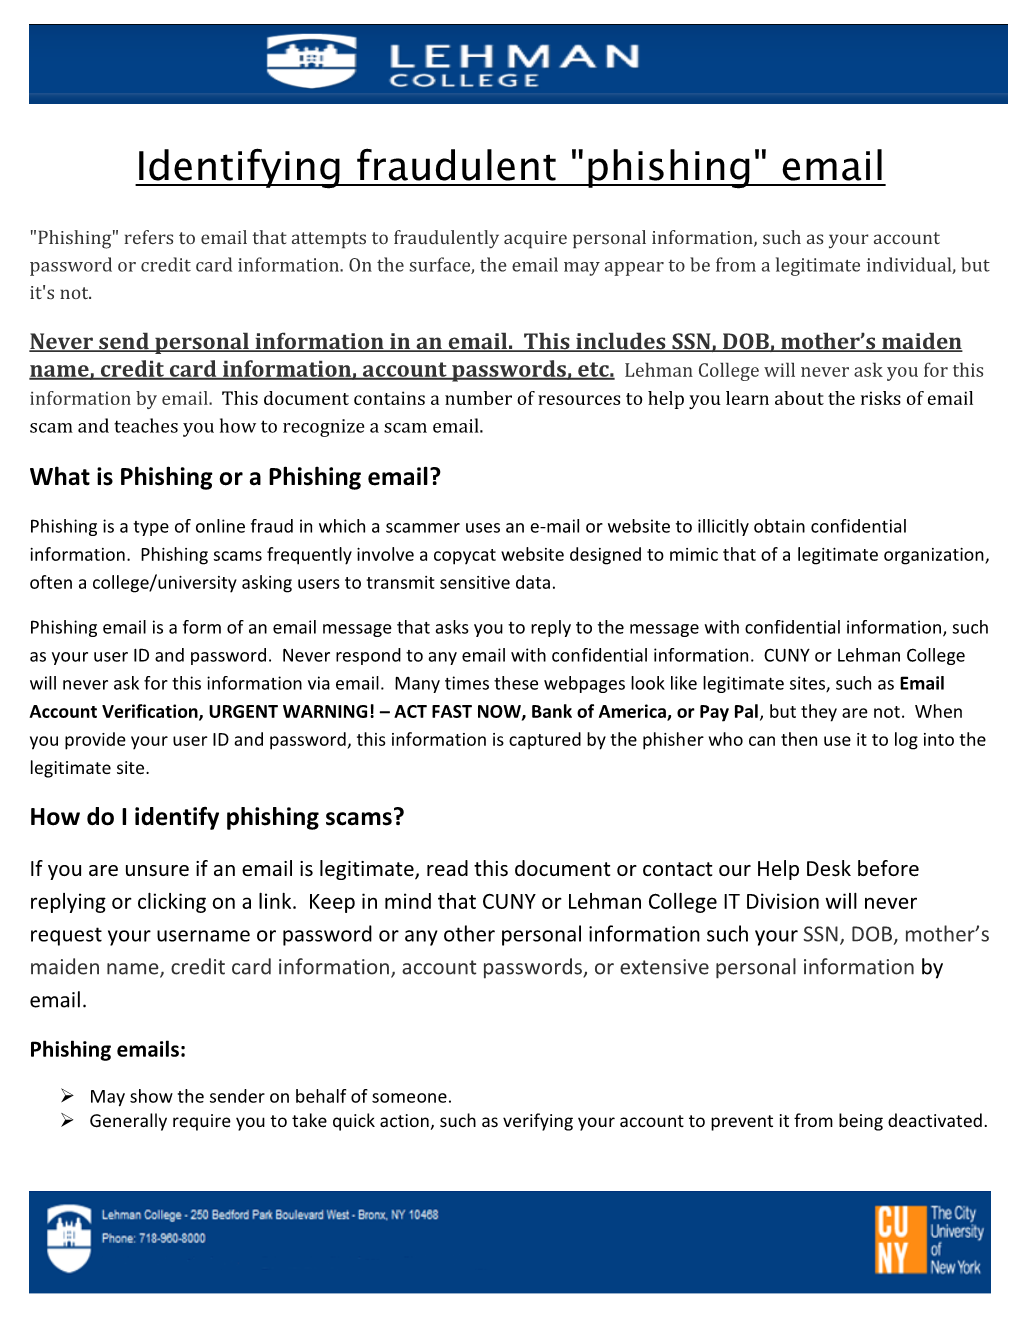 Identifying Fraudulent "Phishing" Email